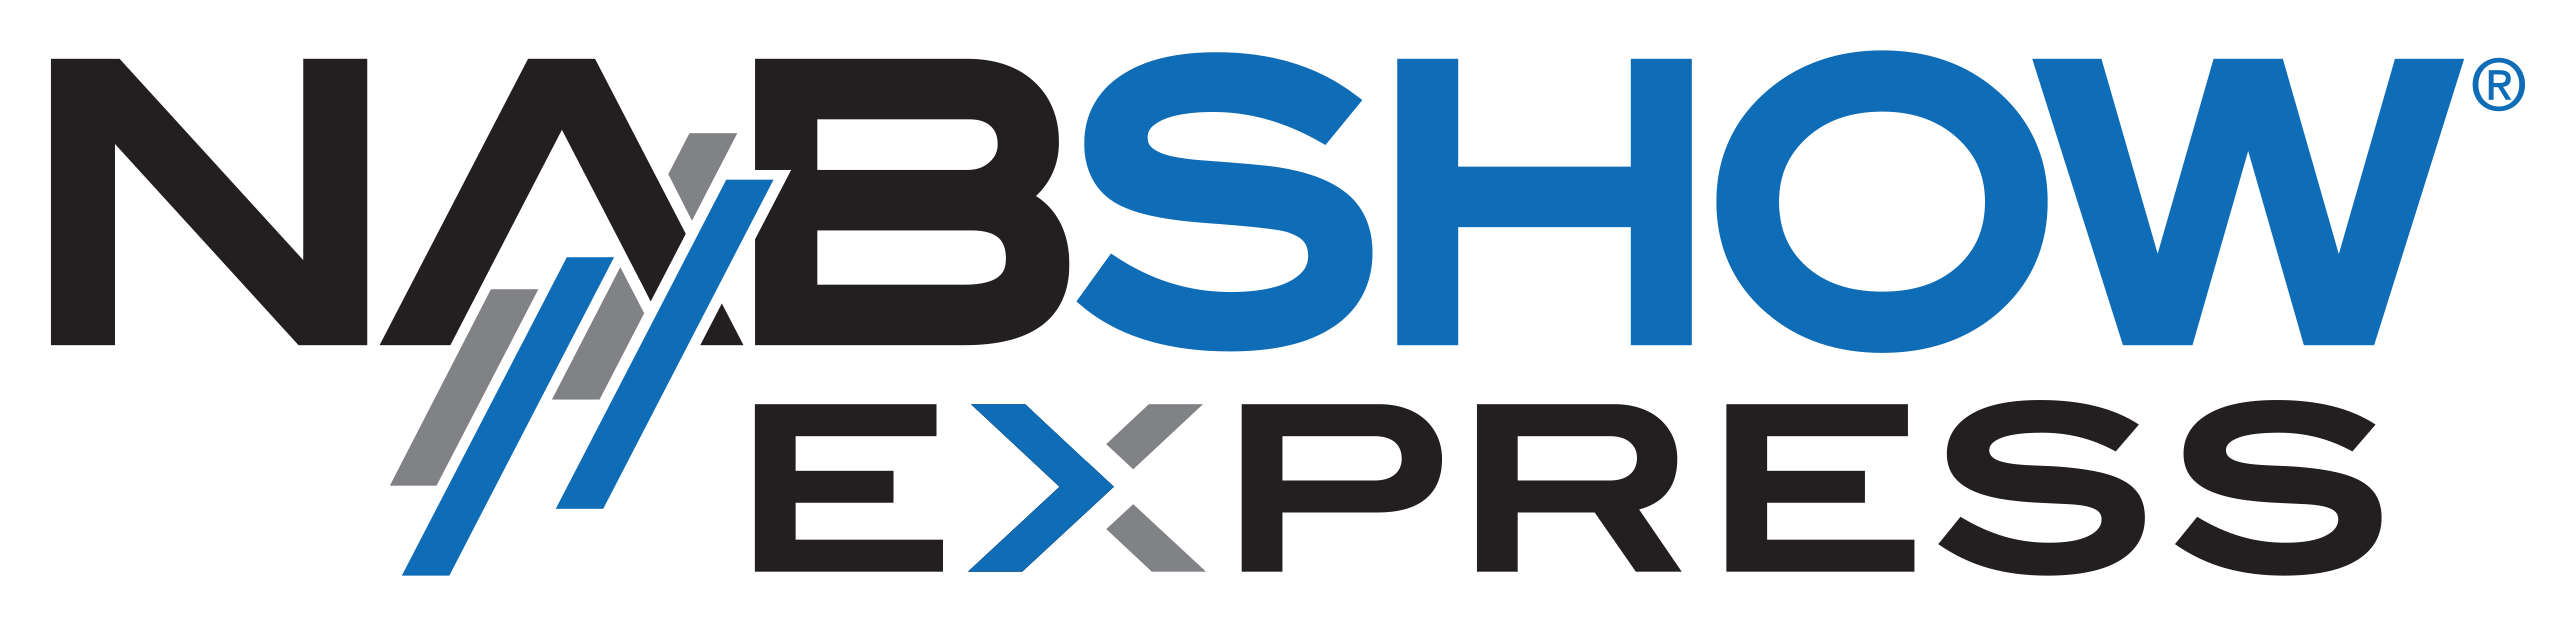 NAB Show Express Logo